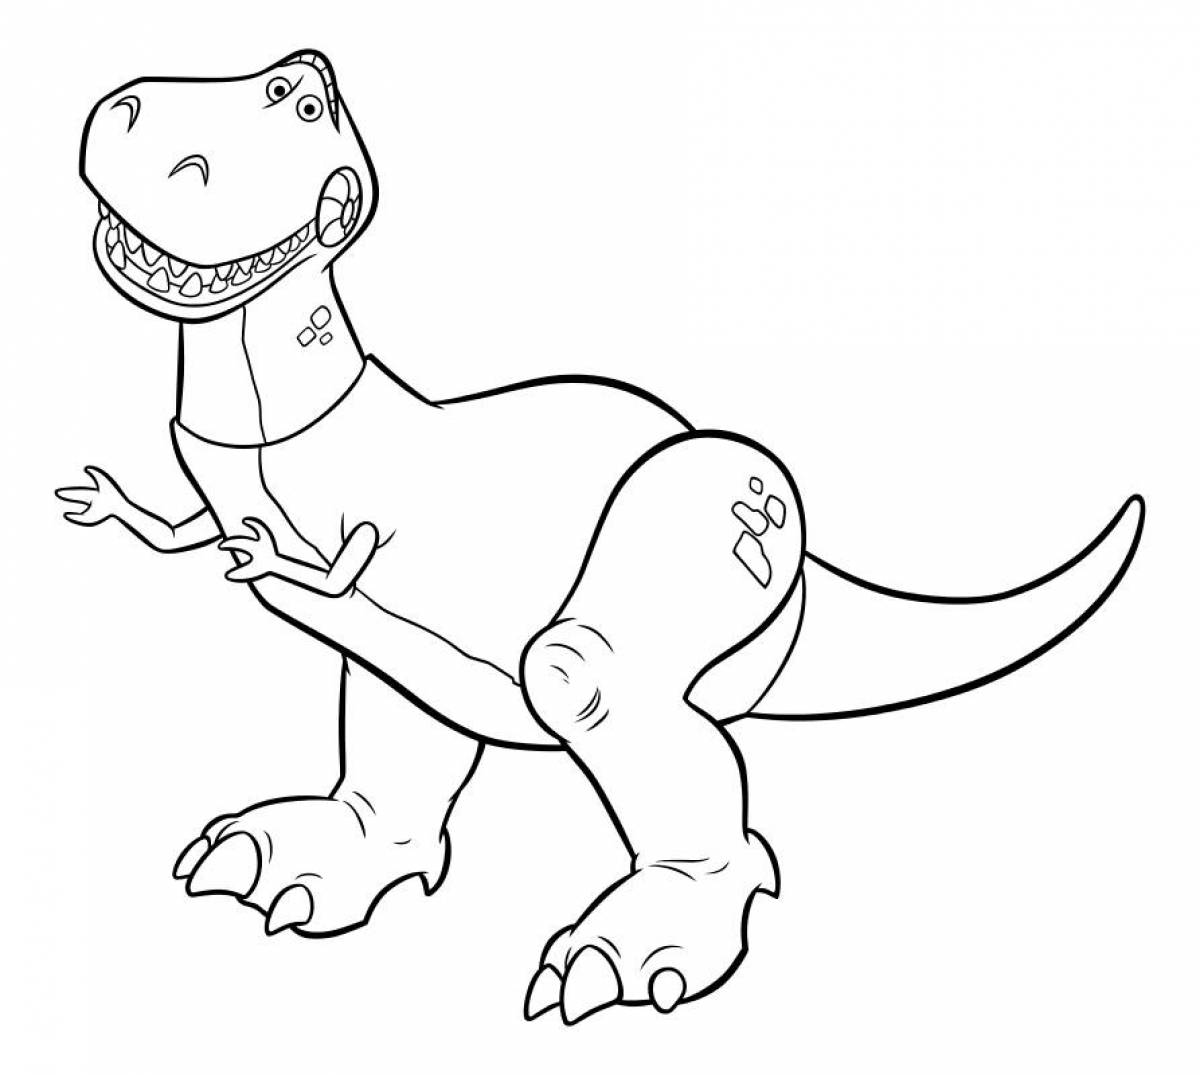 Giant tyrannosaurus rex coloring book